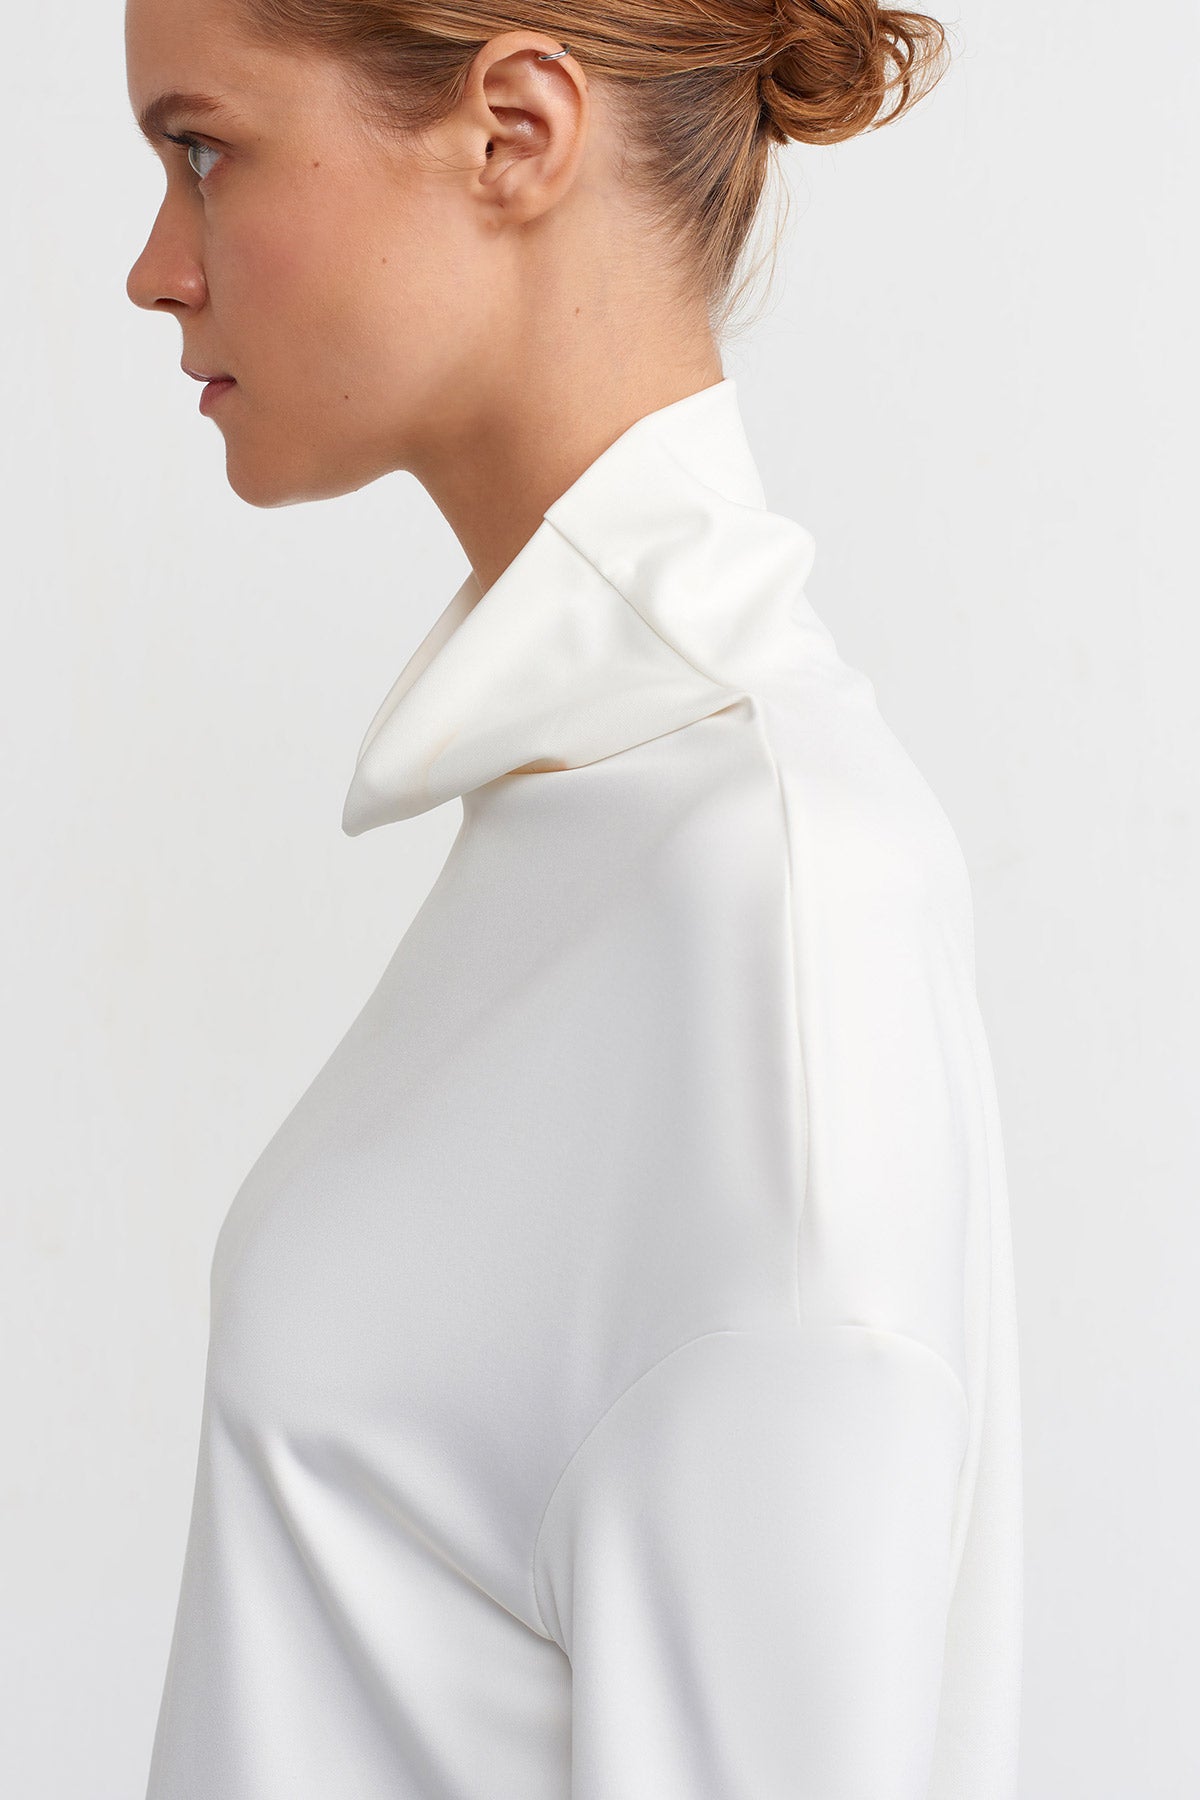 Off White Long Sleeve Scuba Fabric Top-K231011075